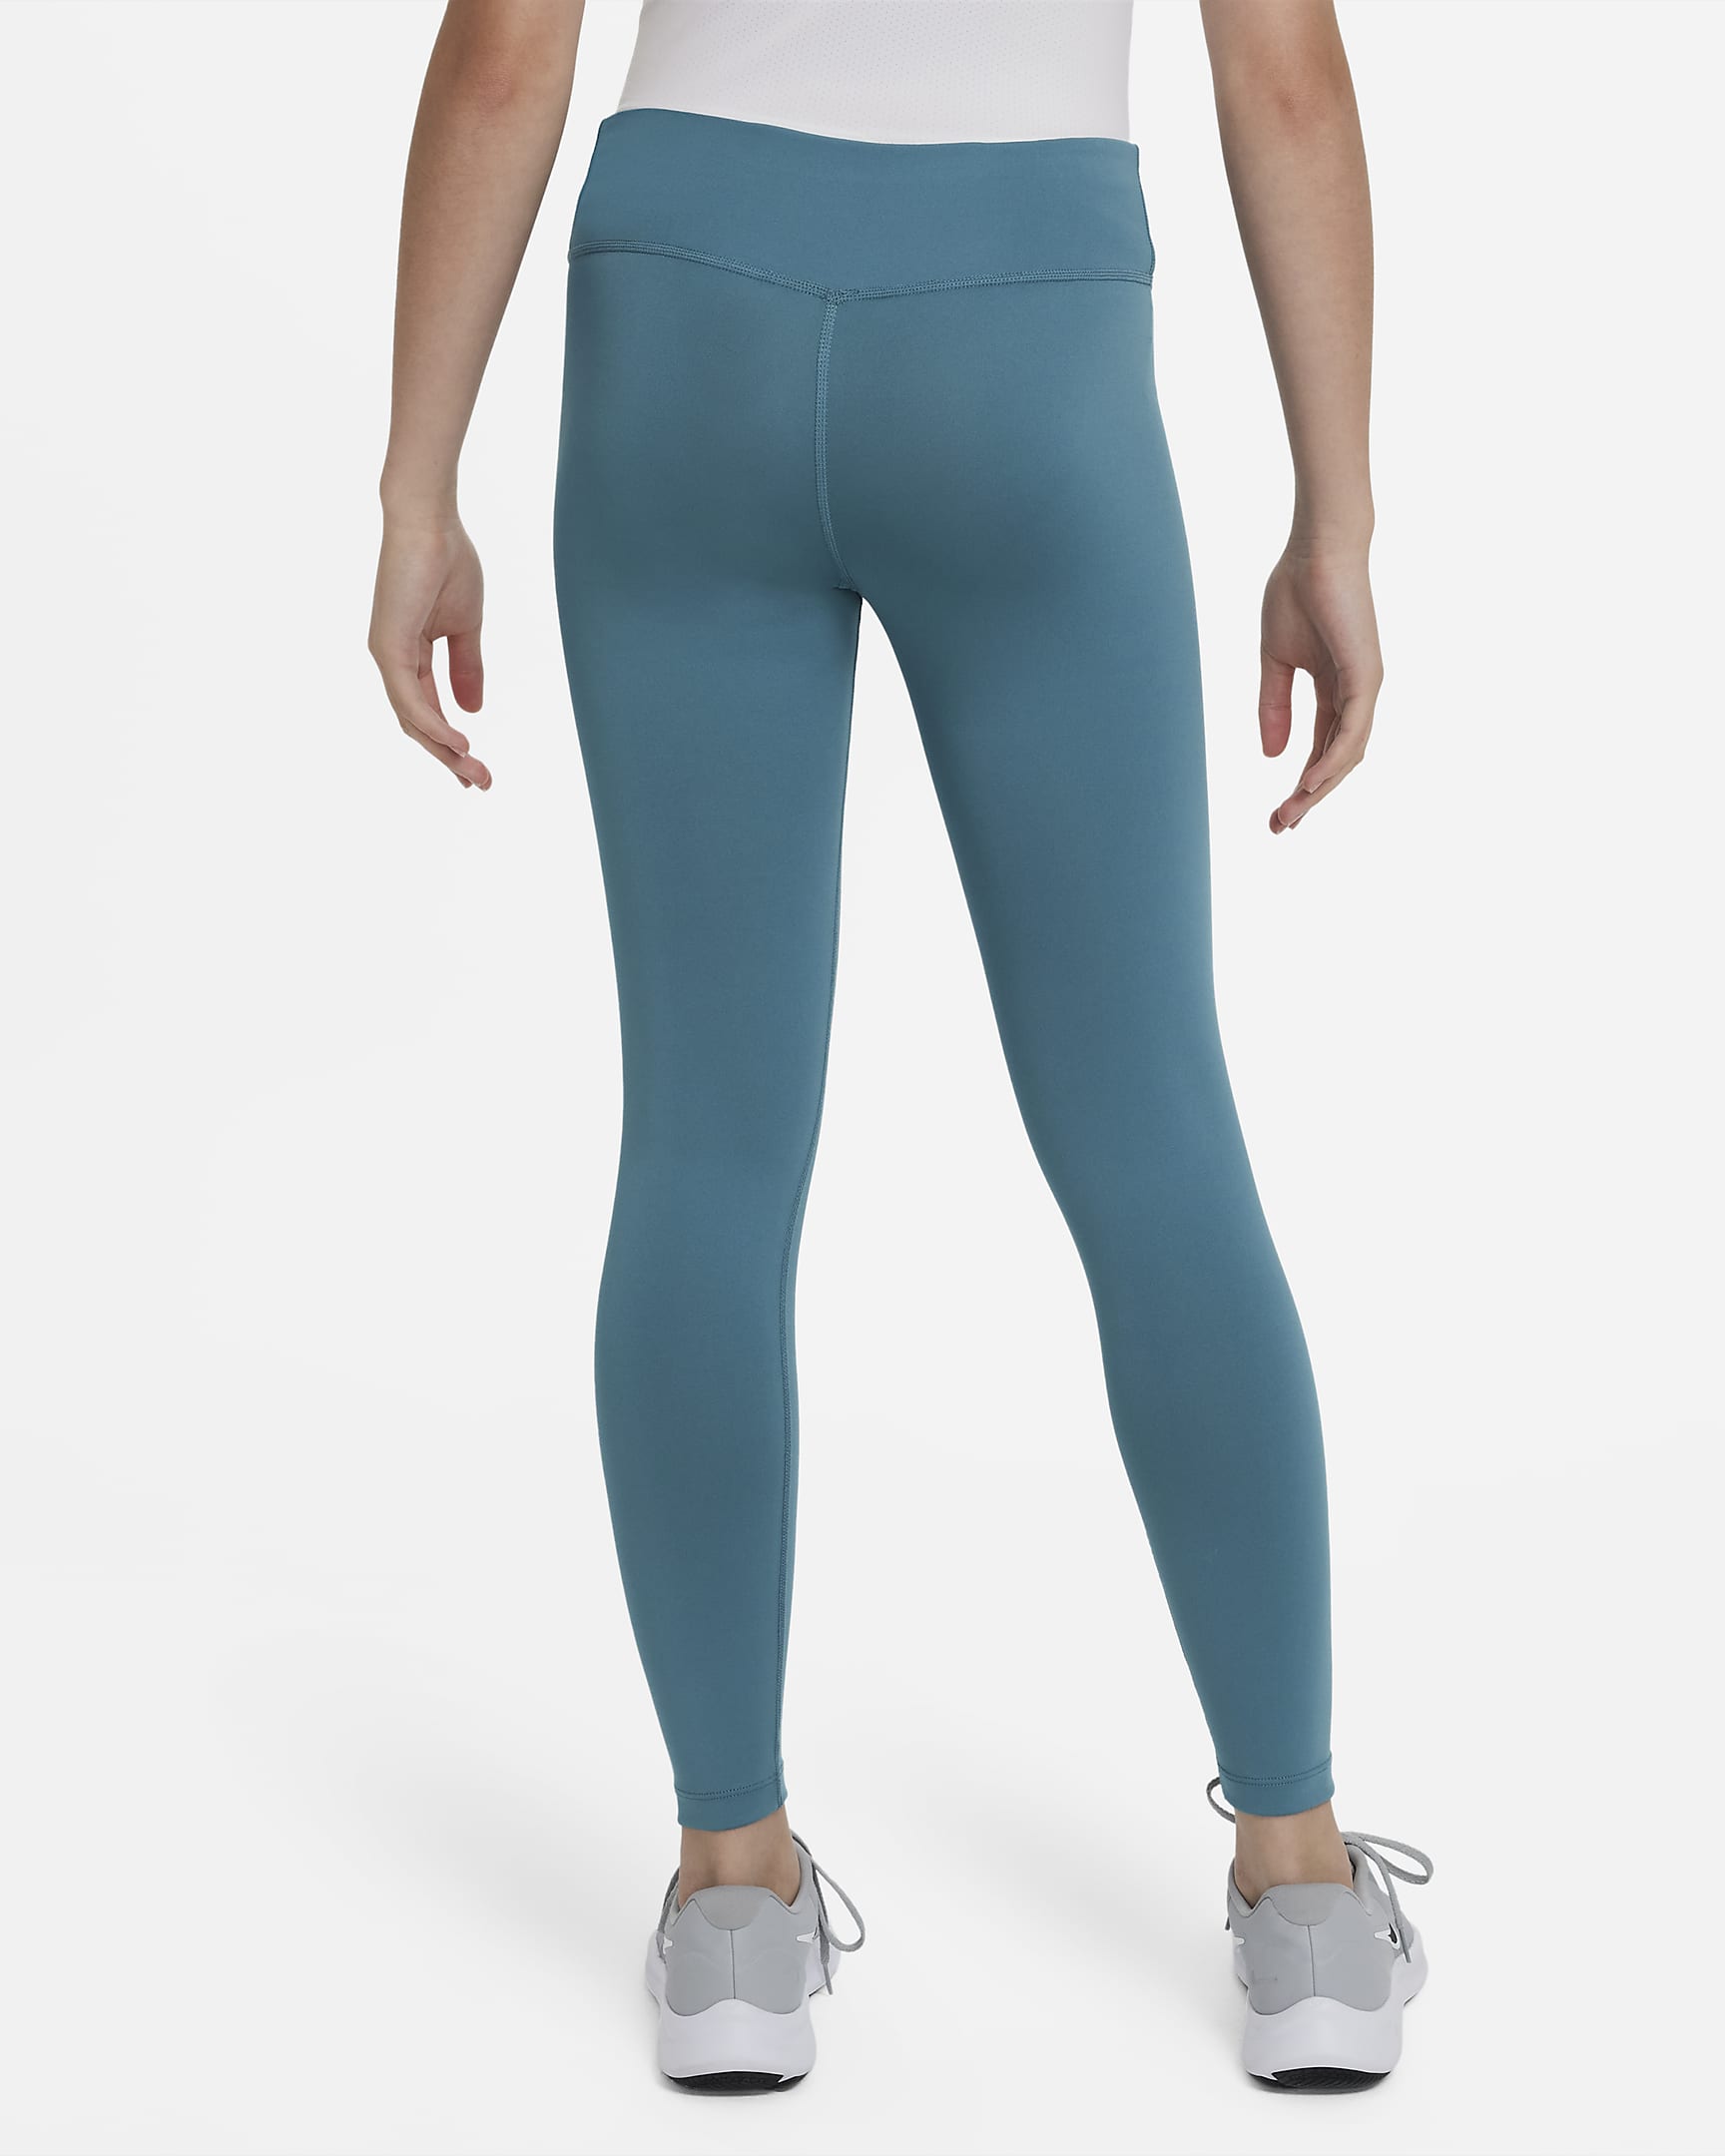 Women's Nike pro dri fit leggings Medium Gray and black 7/8 length | eBay